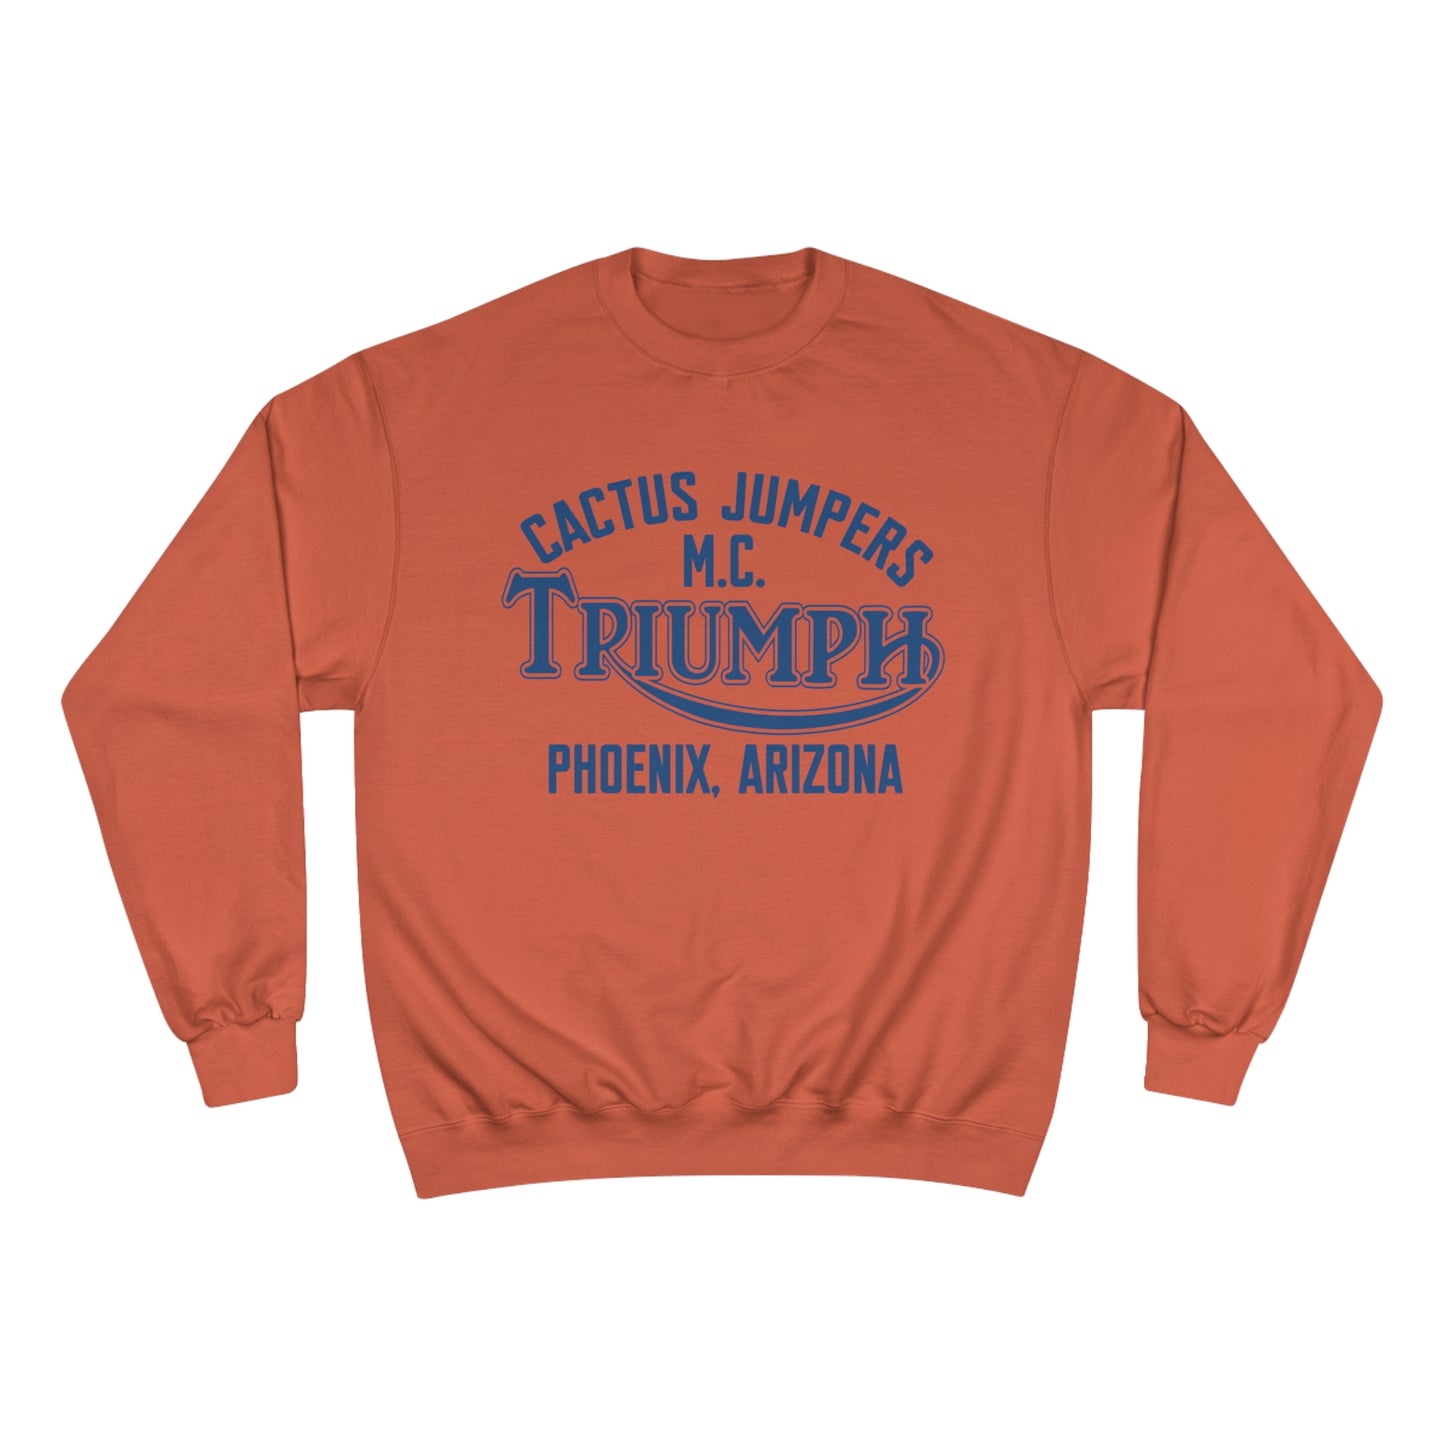 Cactus Jumpers Heavy Classic Champion Sweatshirt